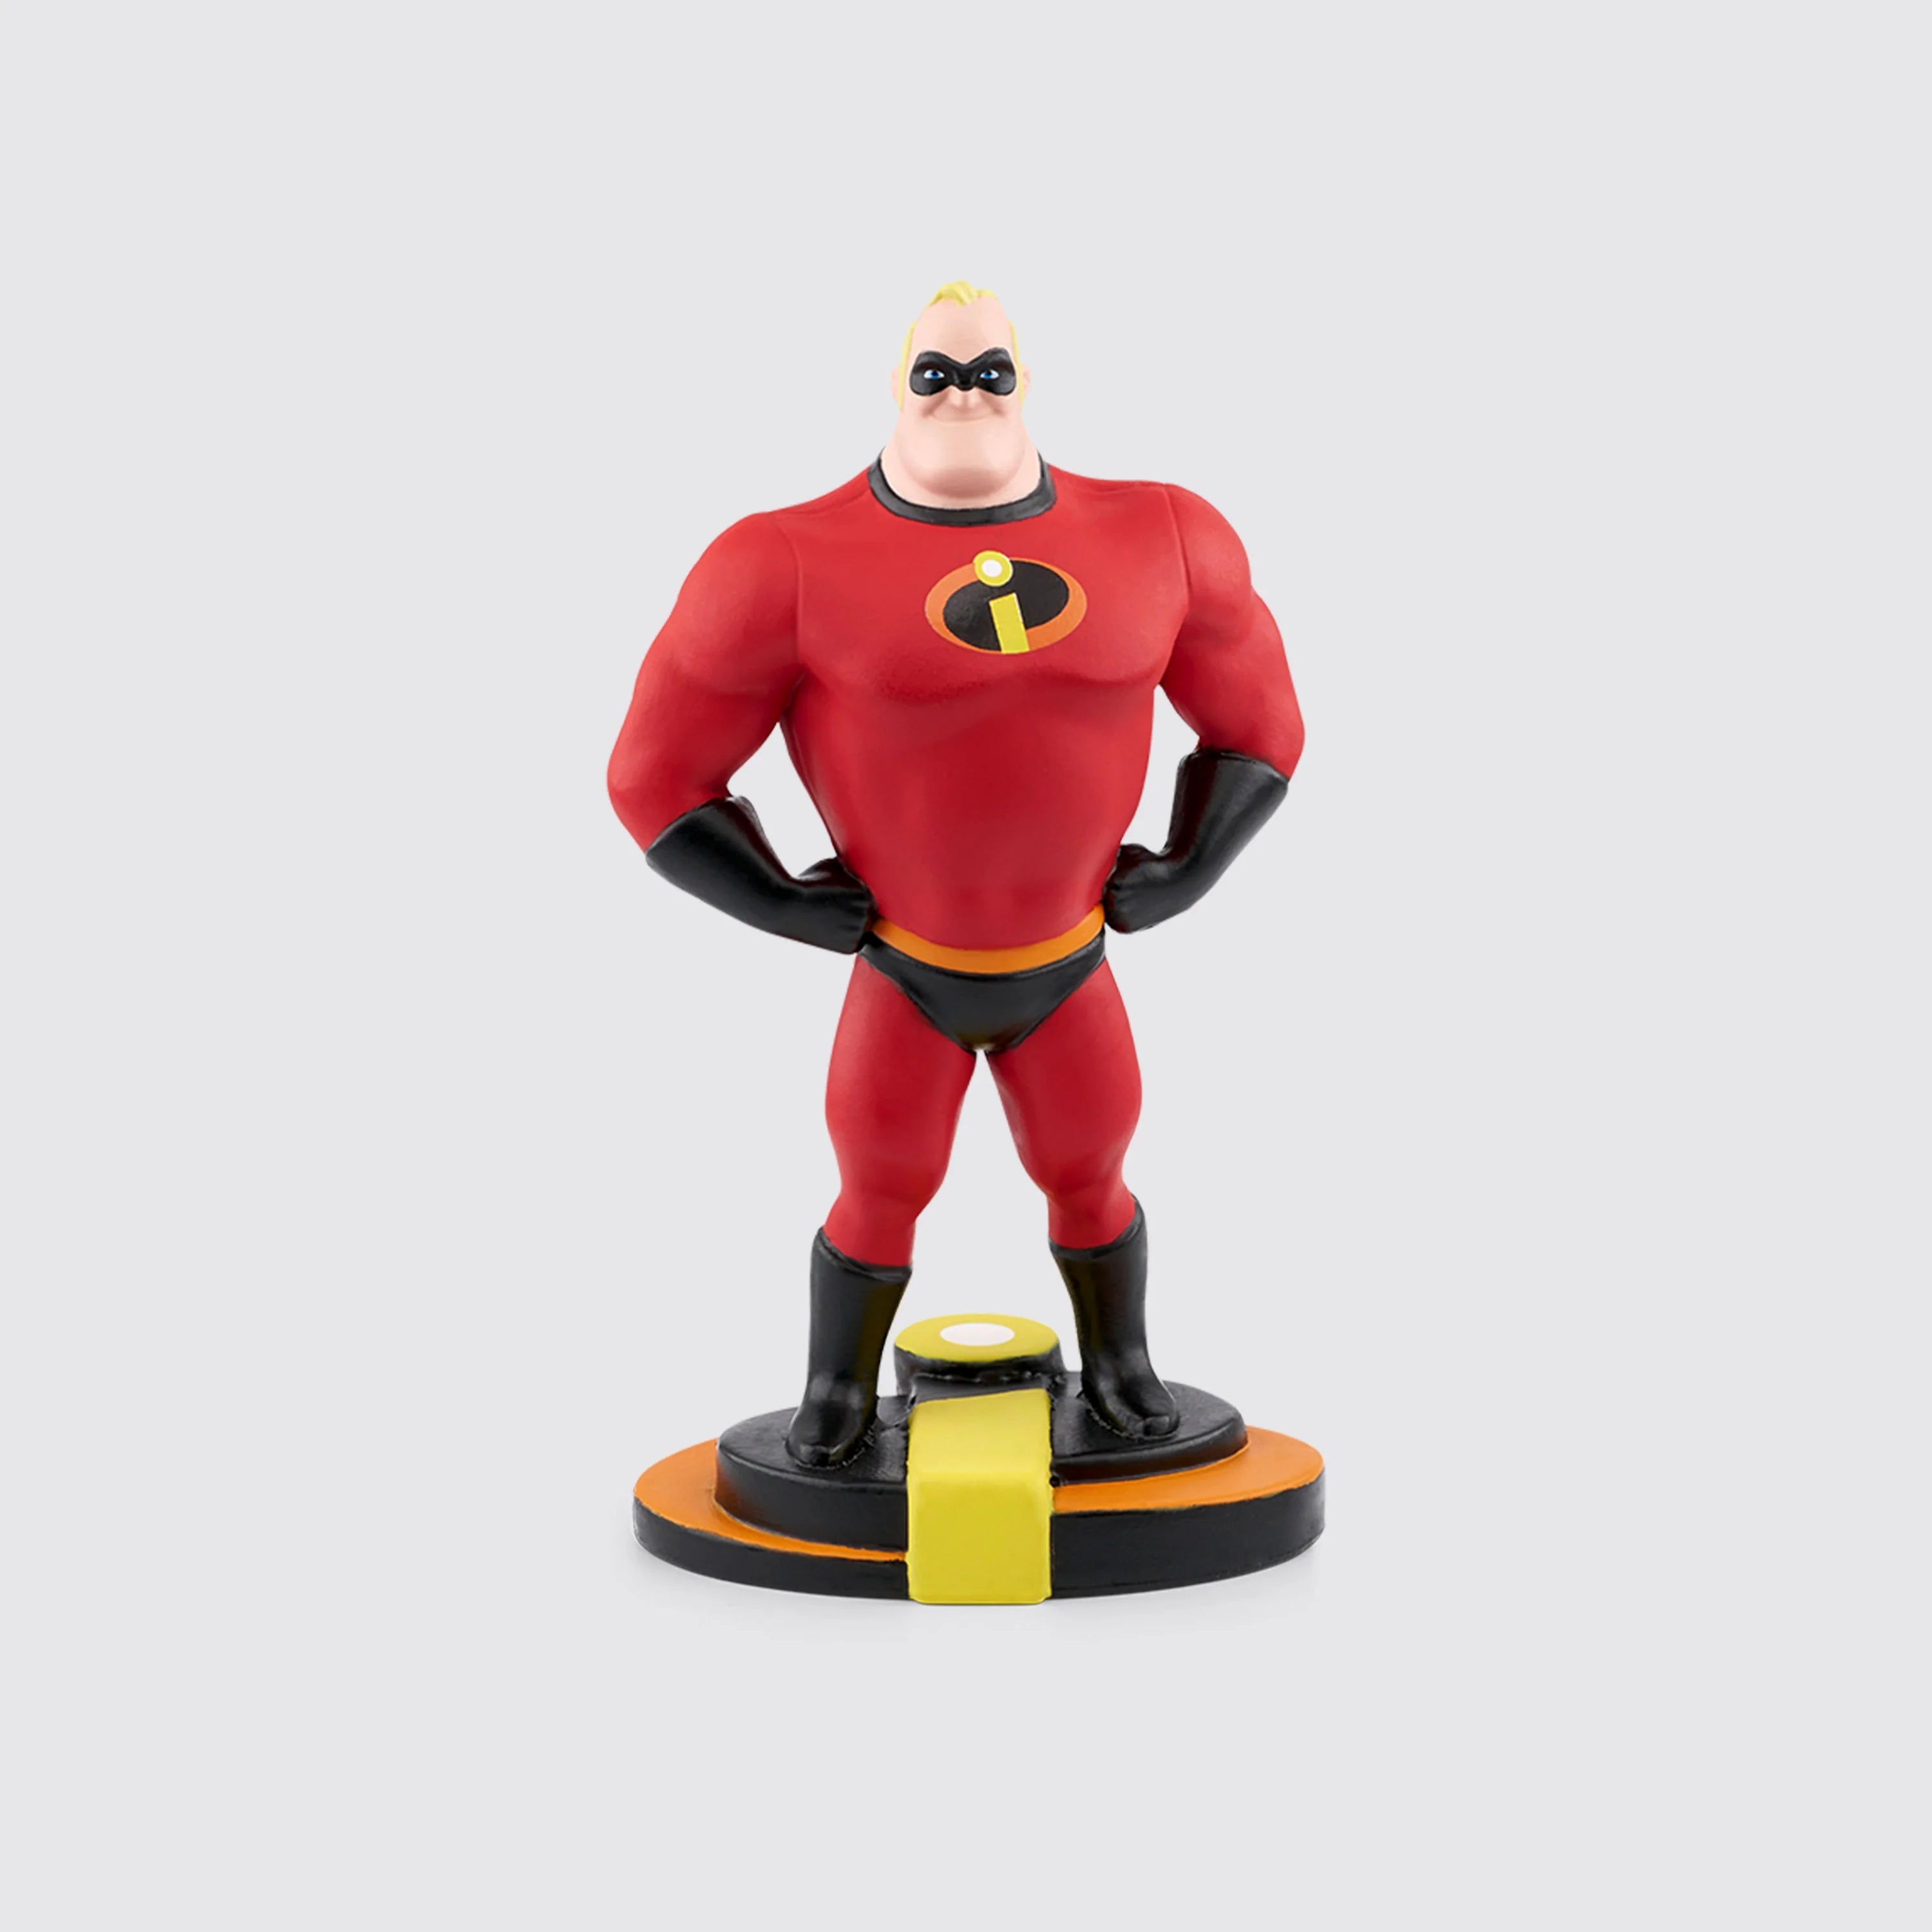 Tonies-Tonies Characters - Disney and Pixar The Incredibles-10001301-Legacy Toys